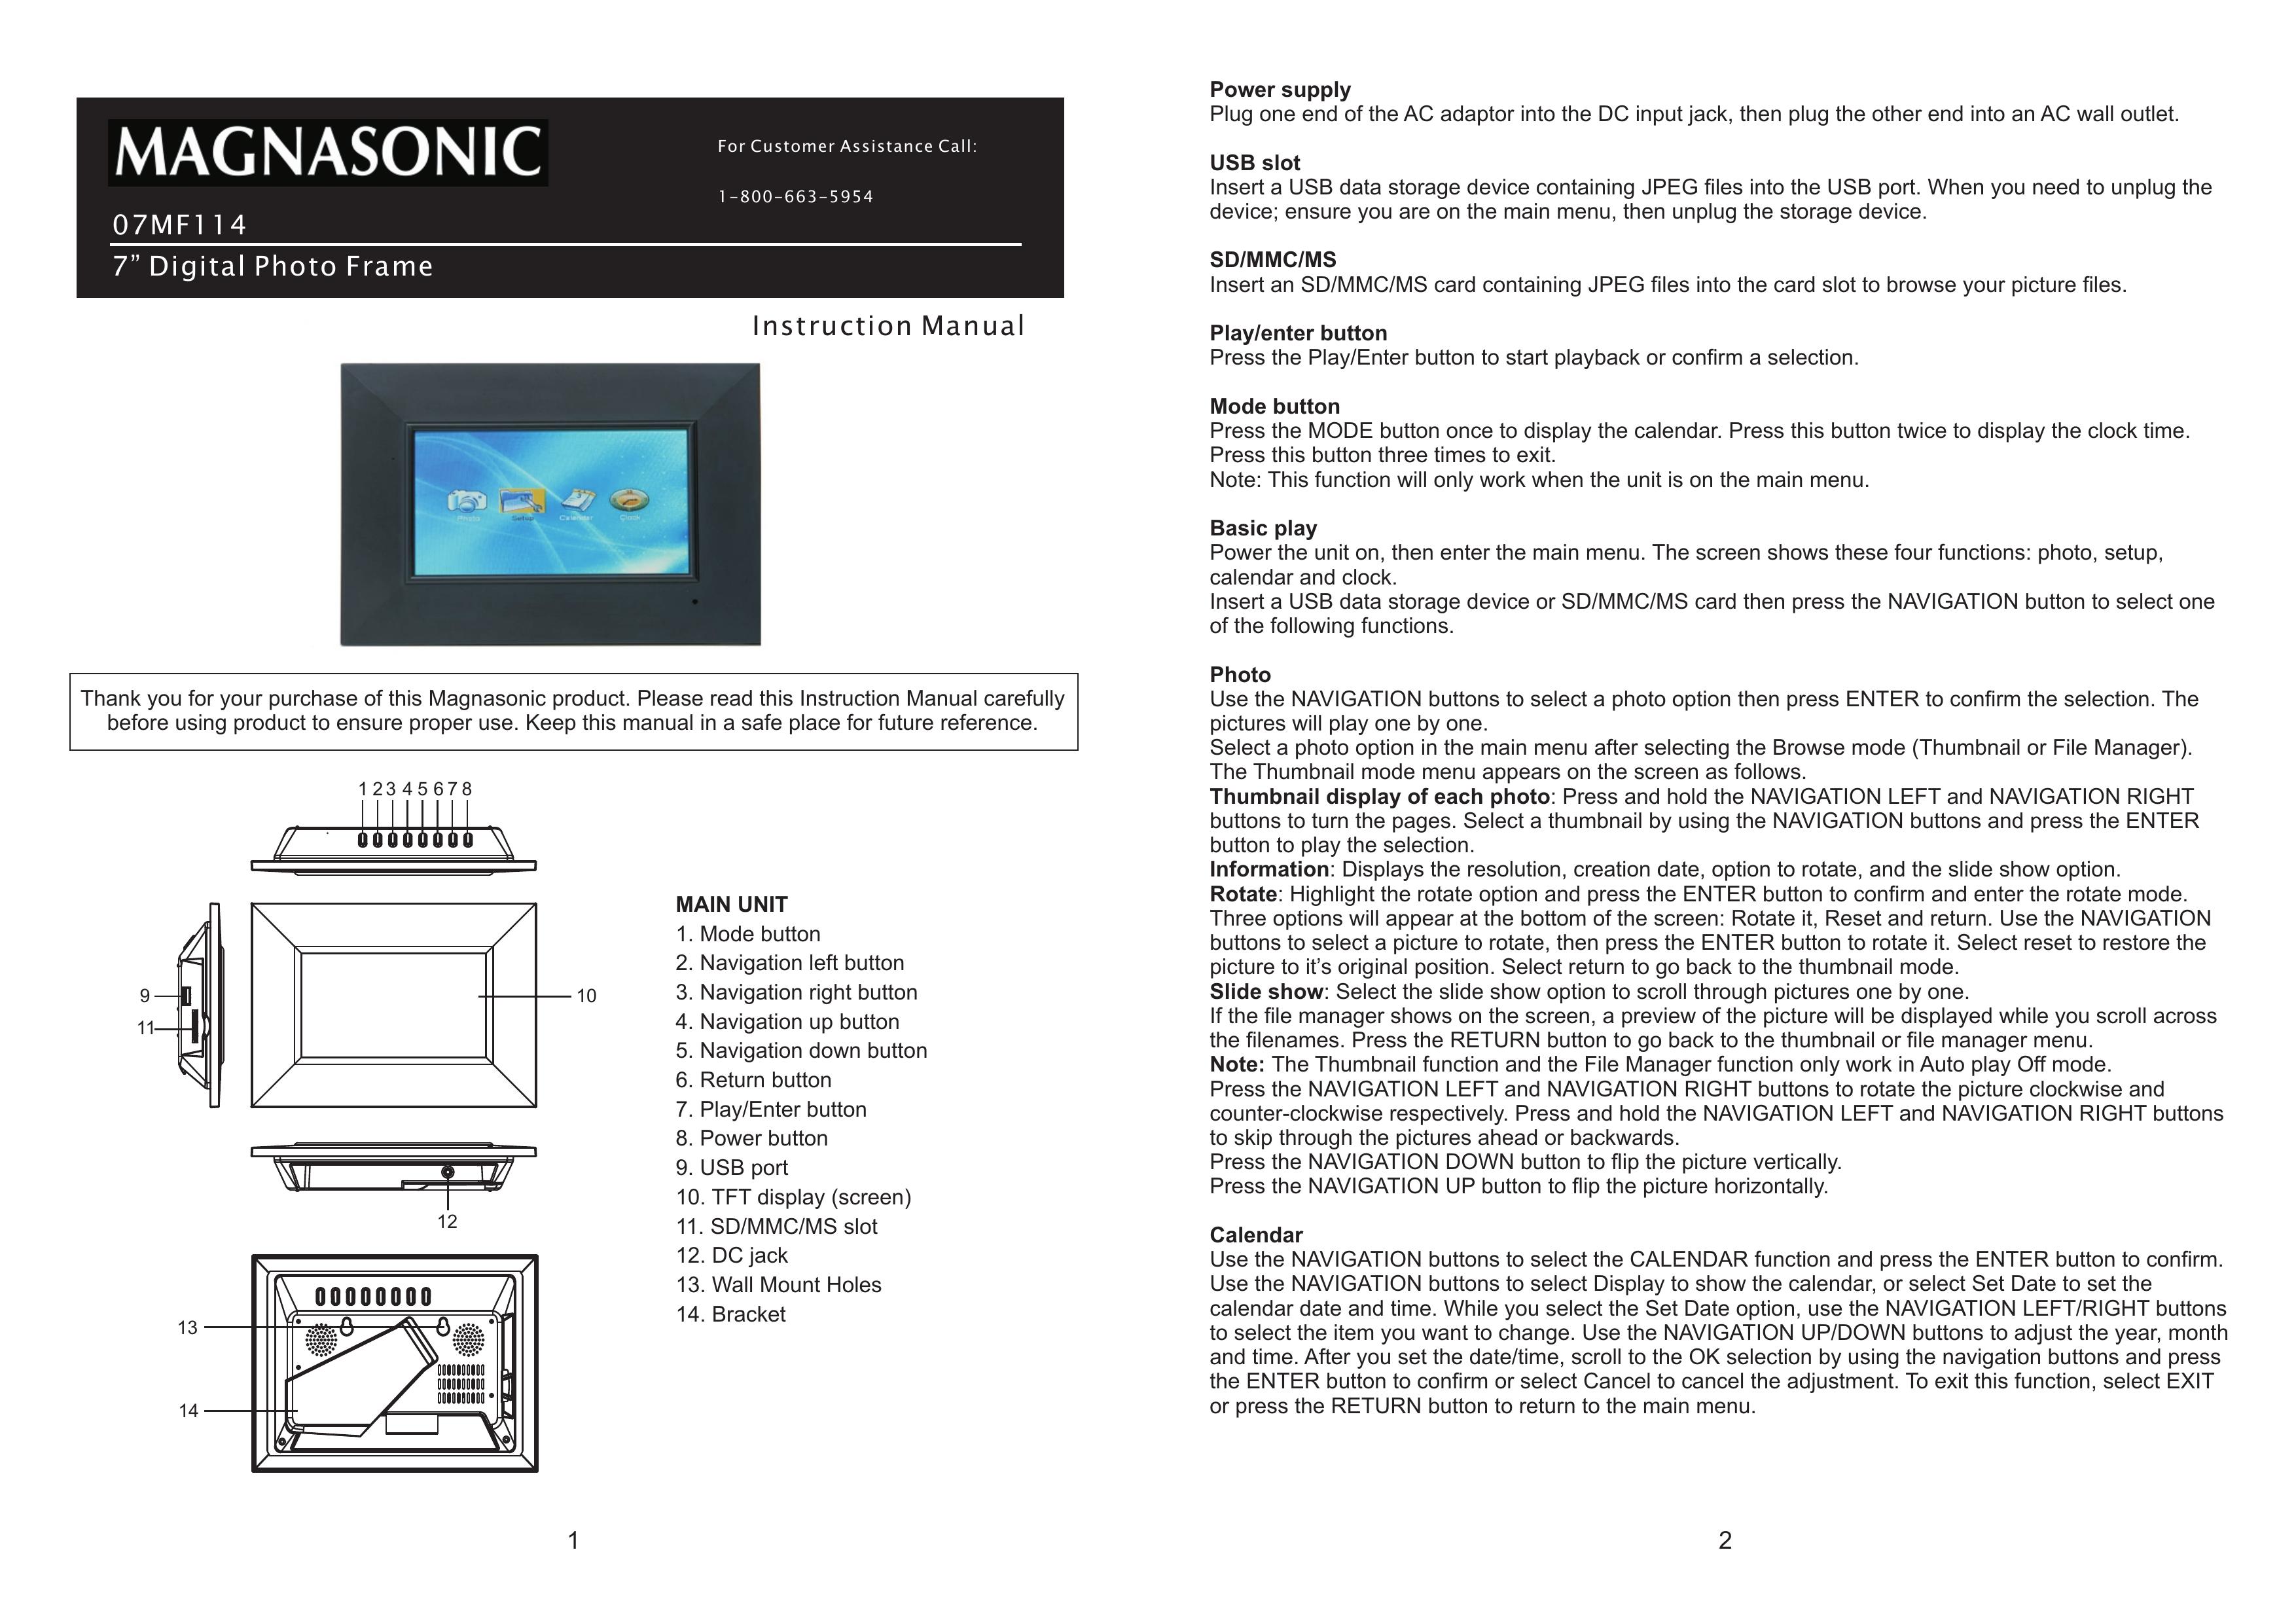 Magnasonic 07MF114 Digital Photo Frame User Manual